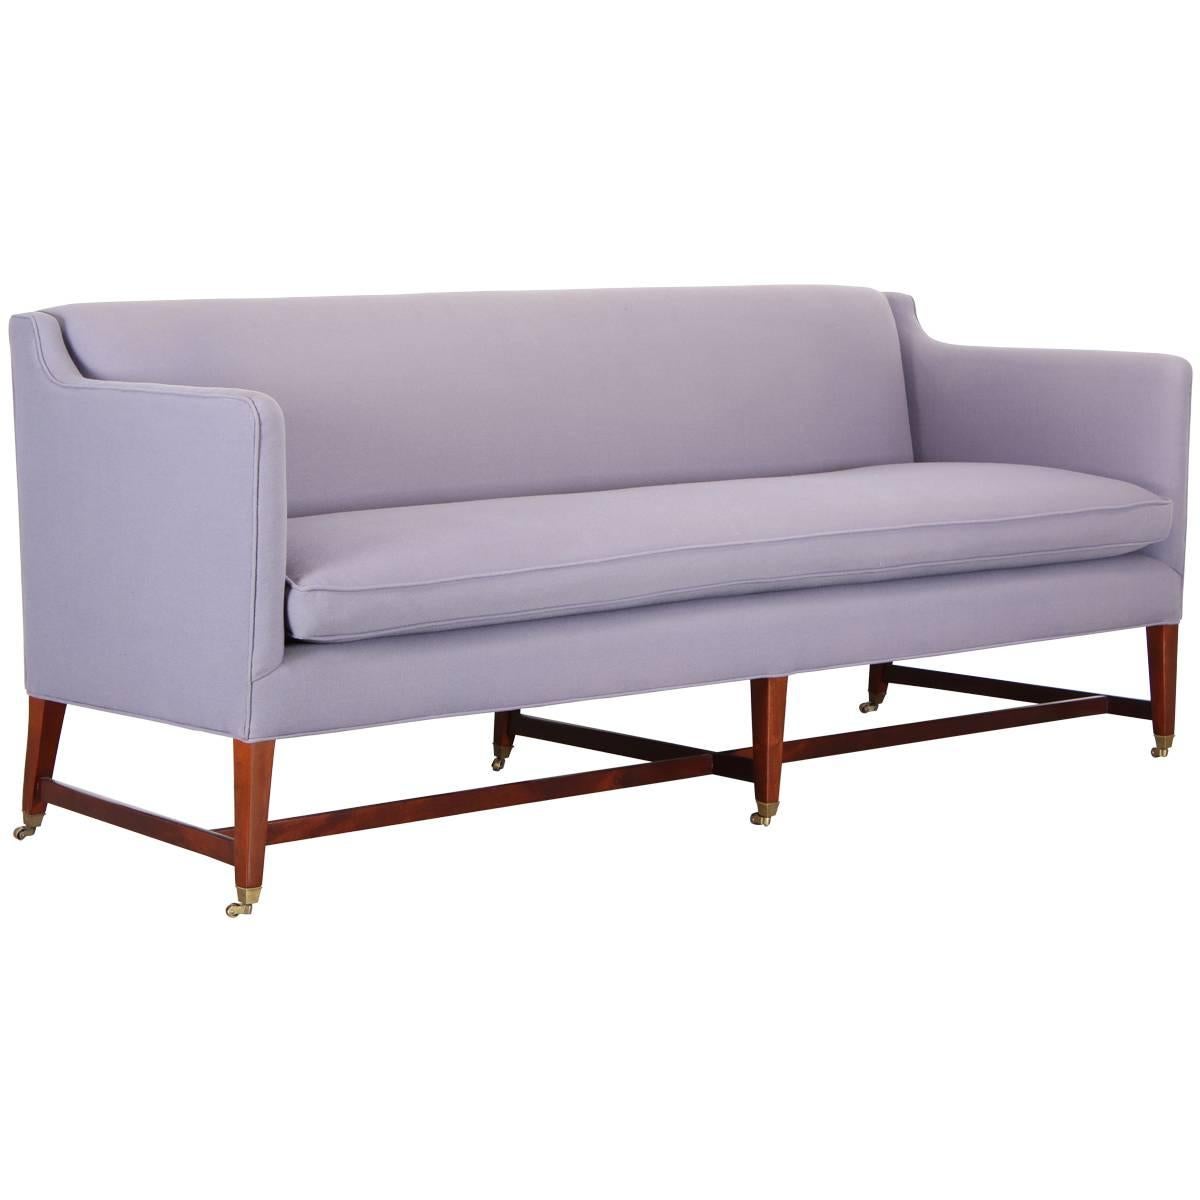 Lawsonia Manufacturing Co Hepplewhite Style Sofa